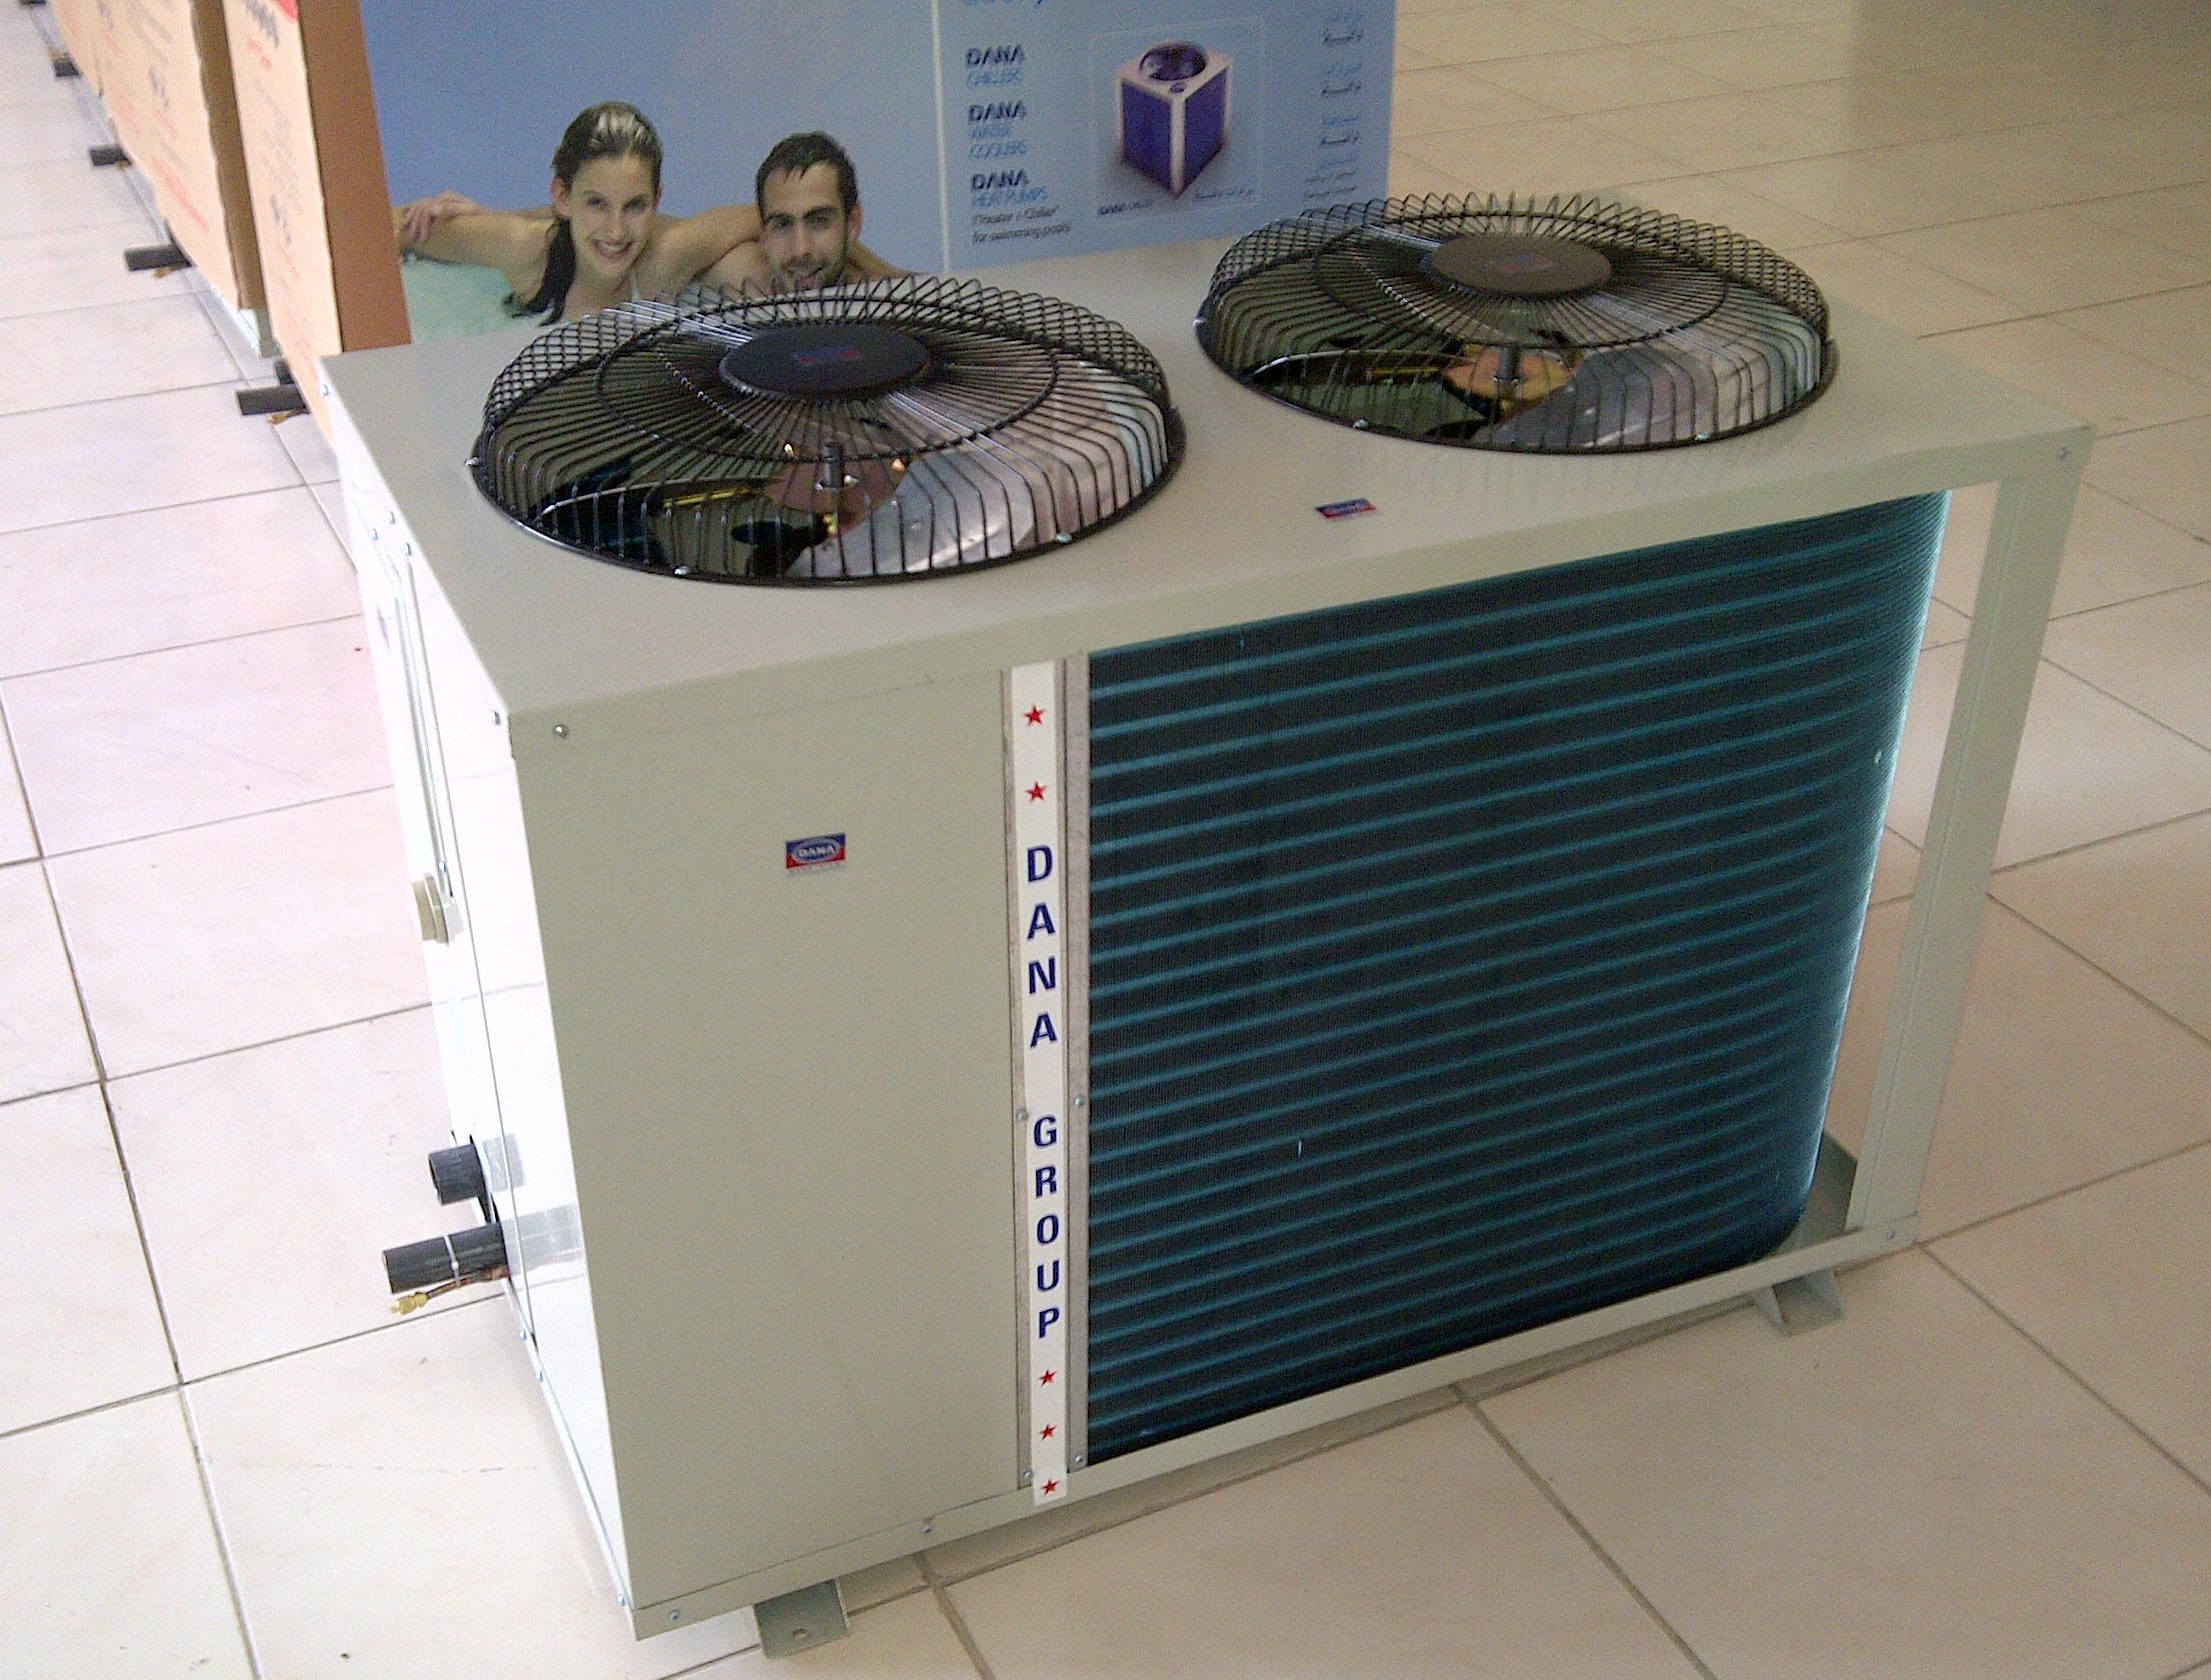 DANA Overhead Tank Water Chiller Cooling System Supplier UAE - Dubai - Ajman - Sharjah - Abu Dhabi